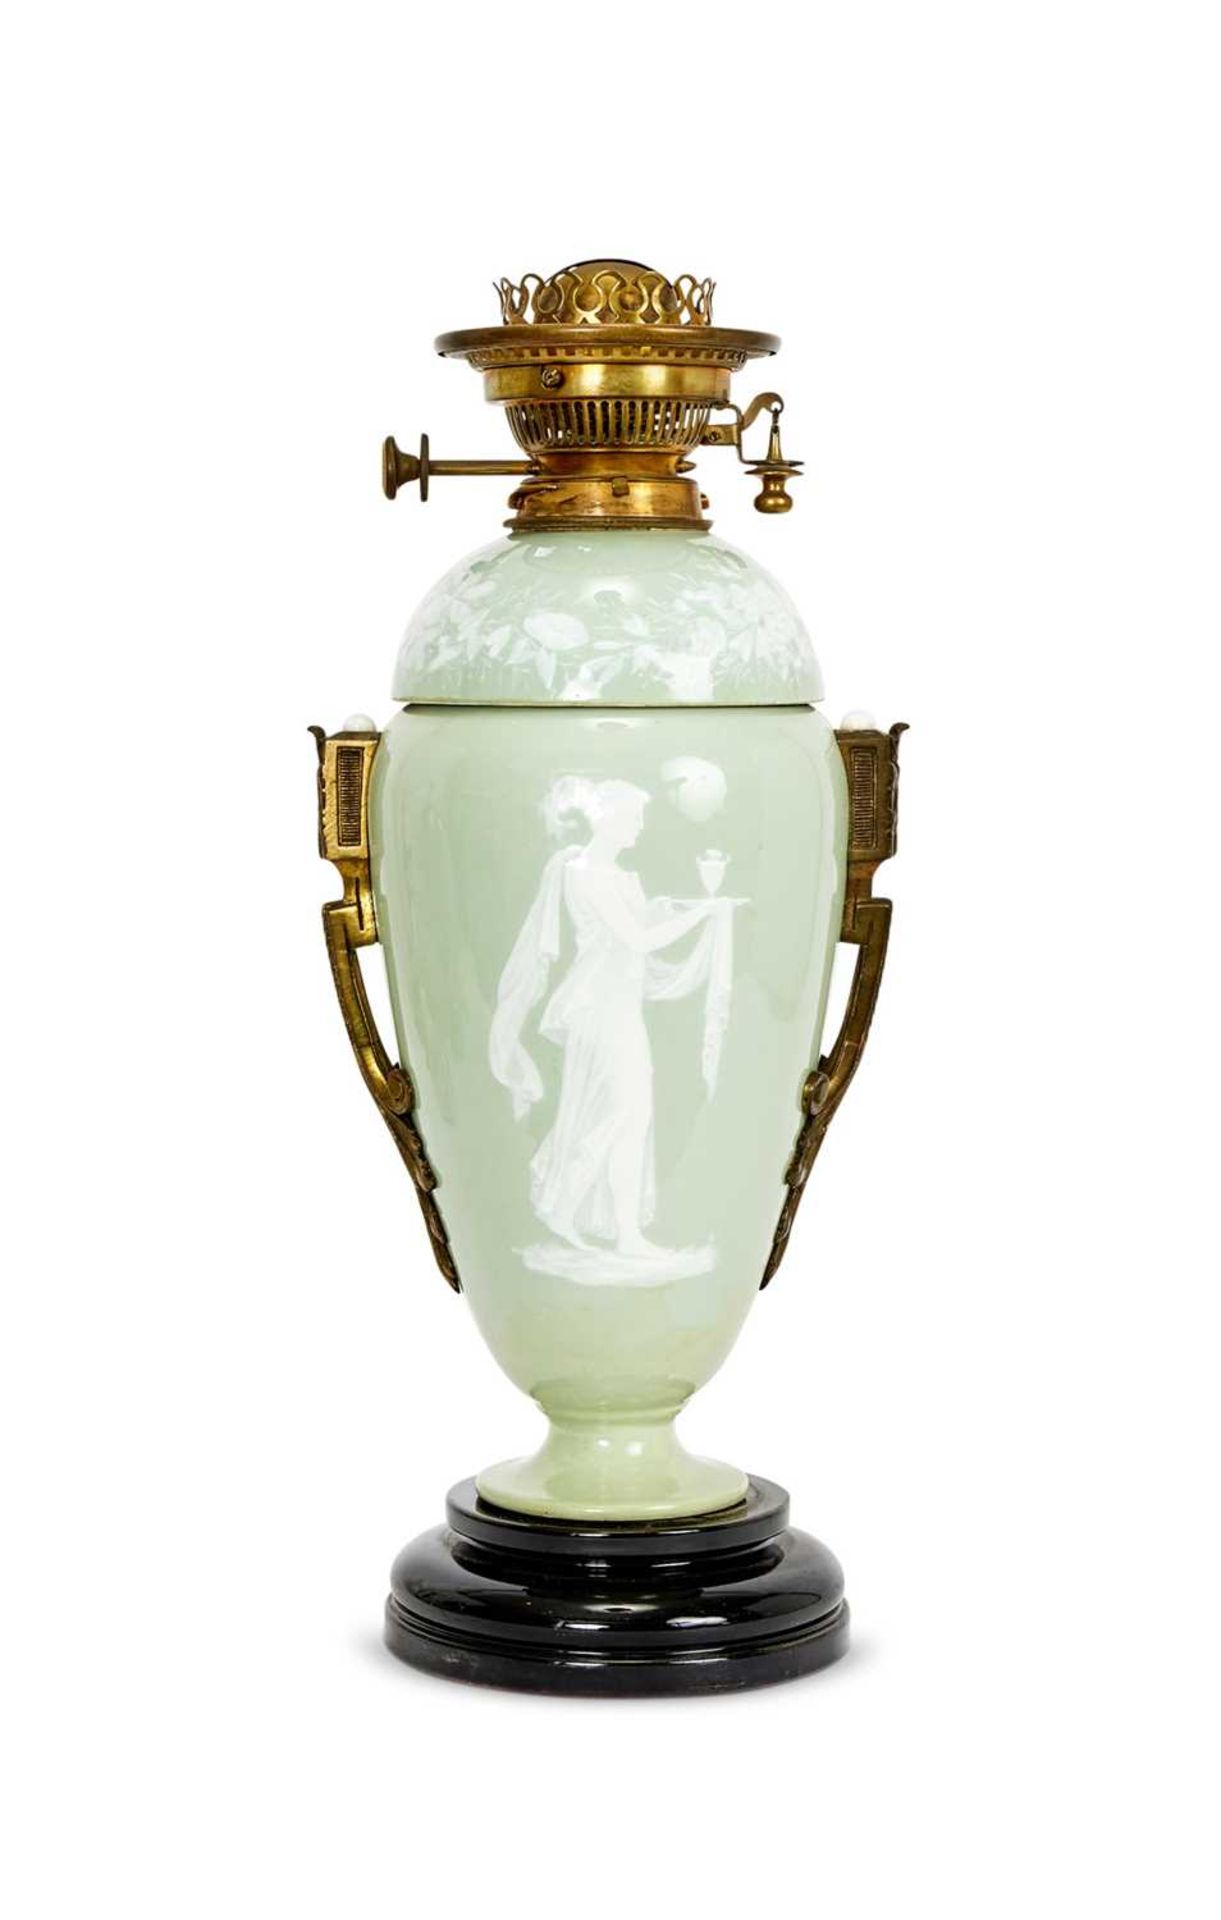 A LATE 19TH CENTURY CELADON PATE SUR PATE PORCELAIN LAMP BASE BY JAMES HINKS